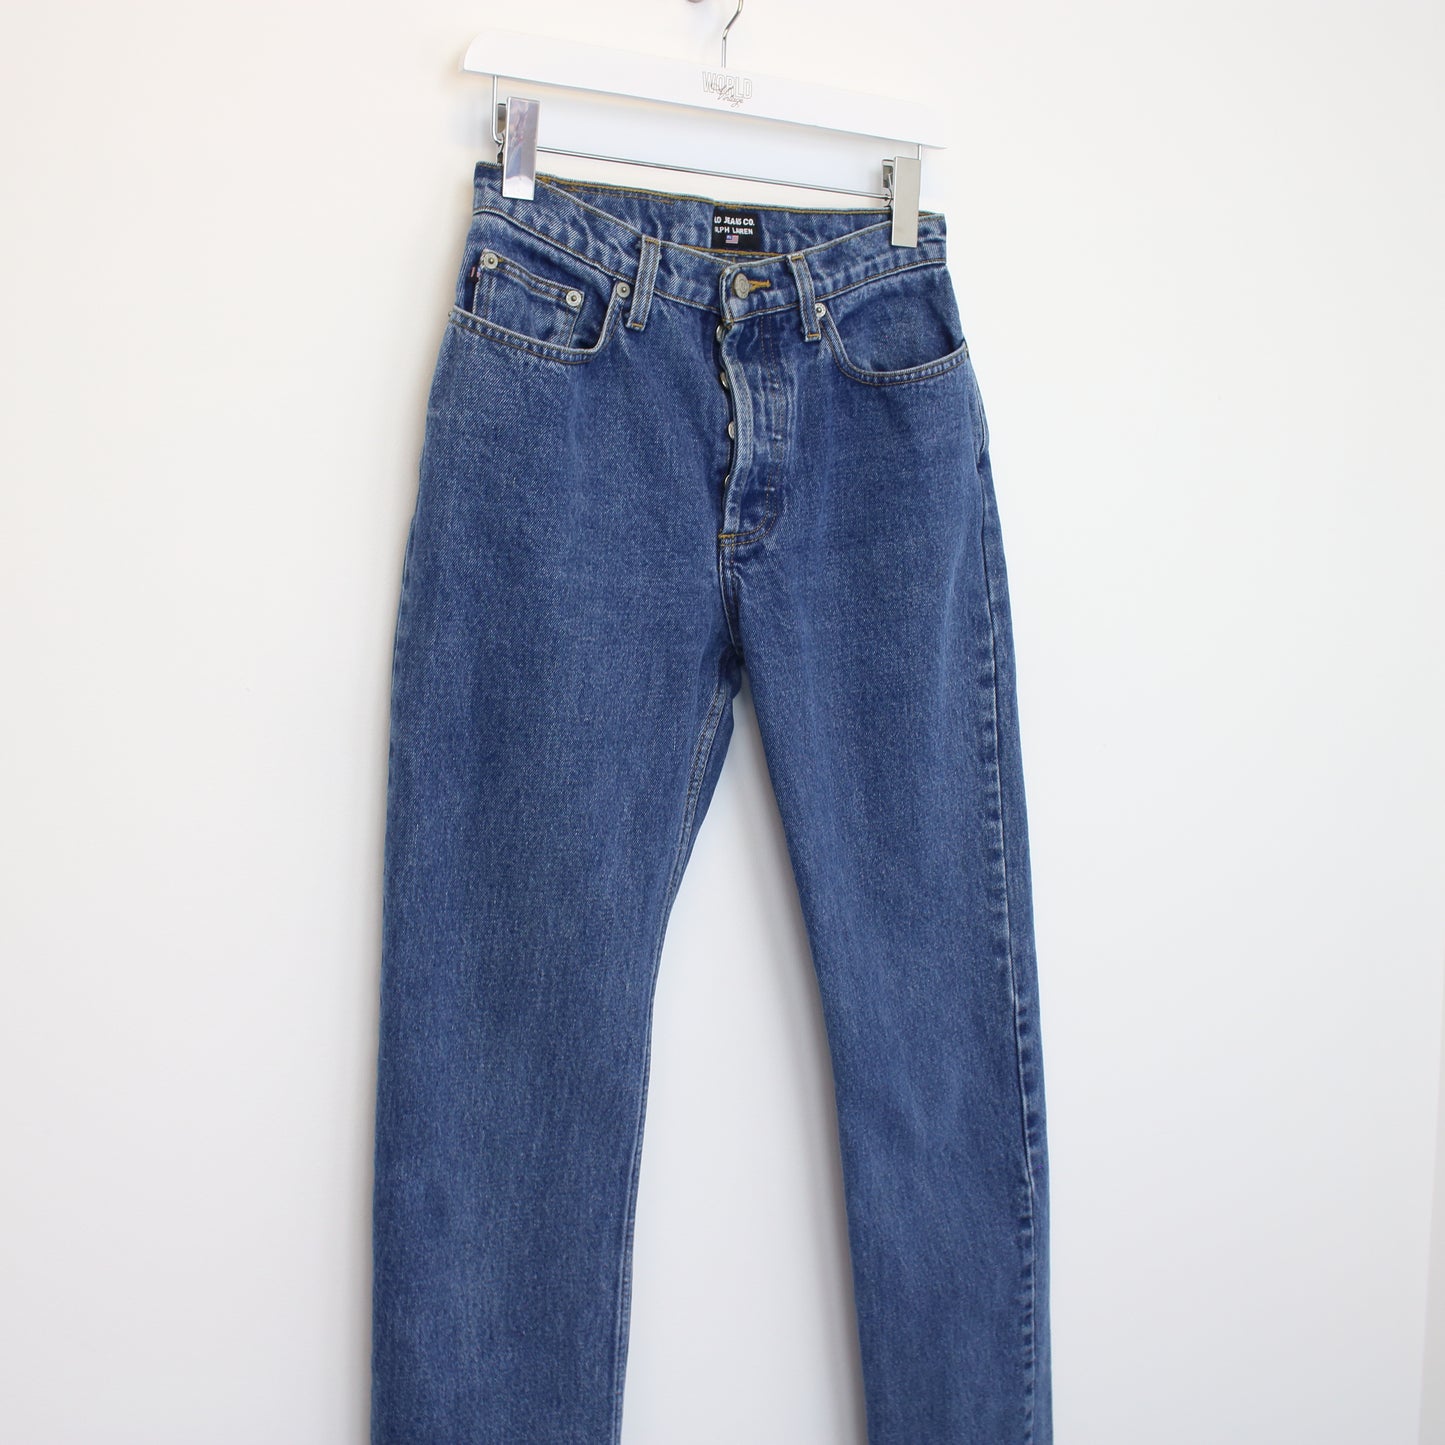 Vintage Polo Ralph Lauren jeans in blue. Best fits W27 L30